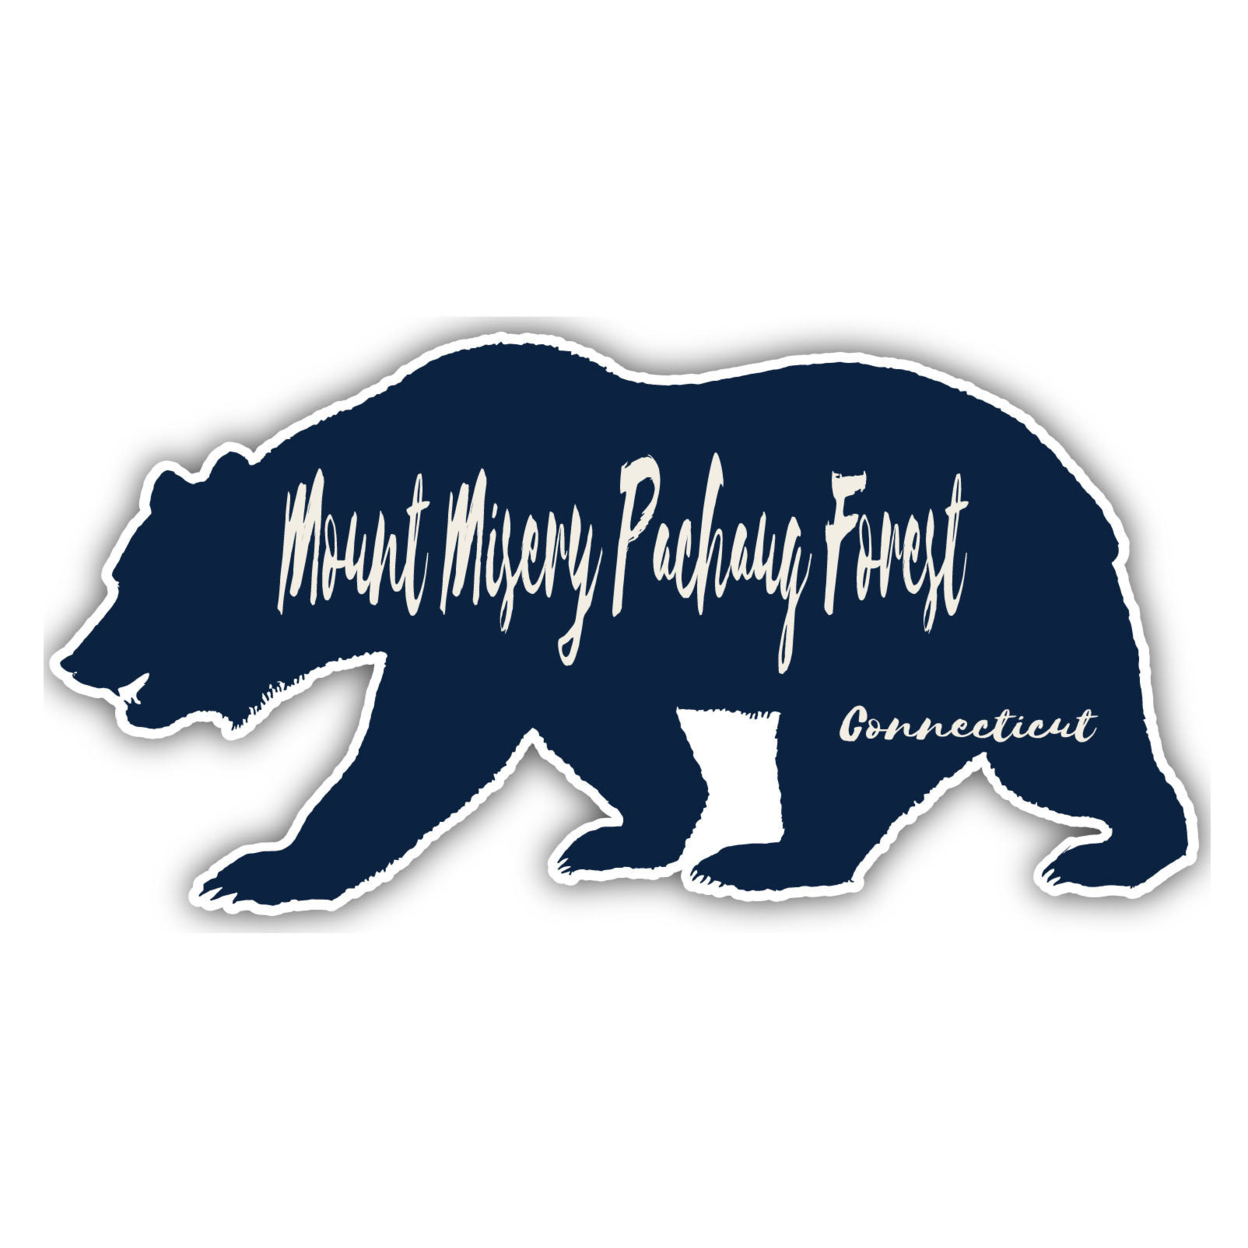 Mount Misery Pachaug Forest Connecticut Souvenir Decorative Stickers (Choose Theme And Size) - Single Unit, 2-Inch, Tent